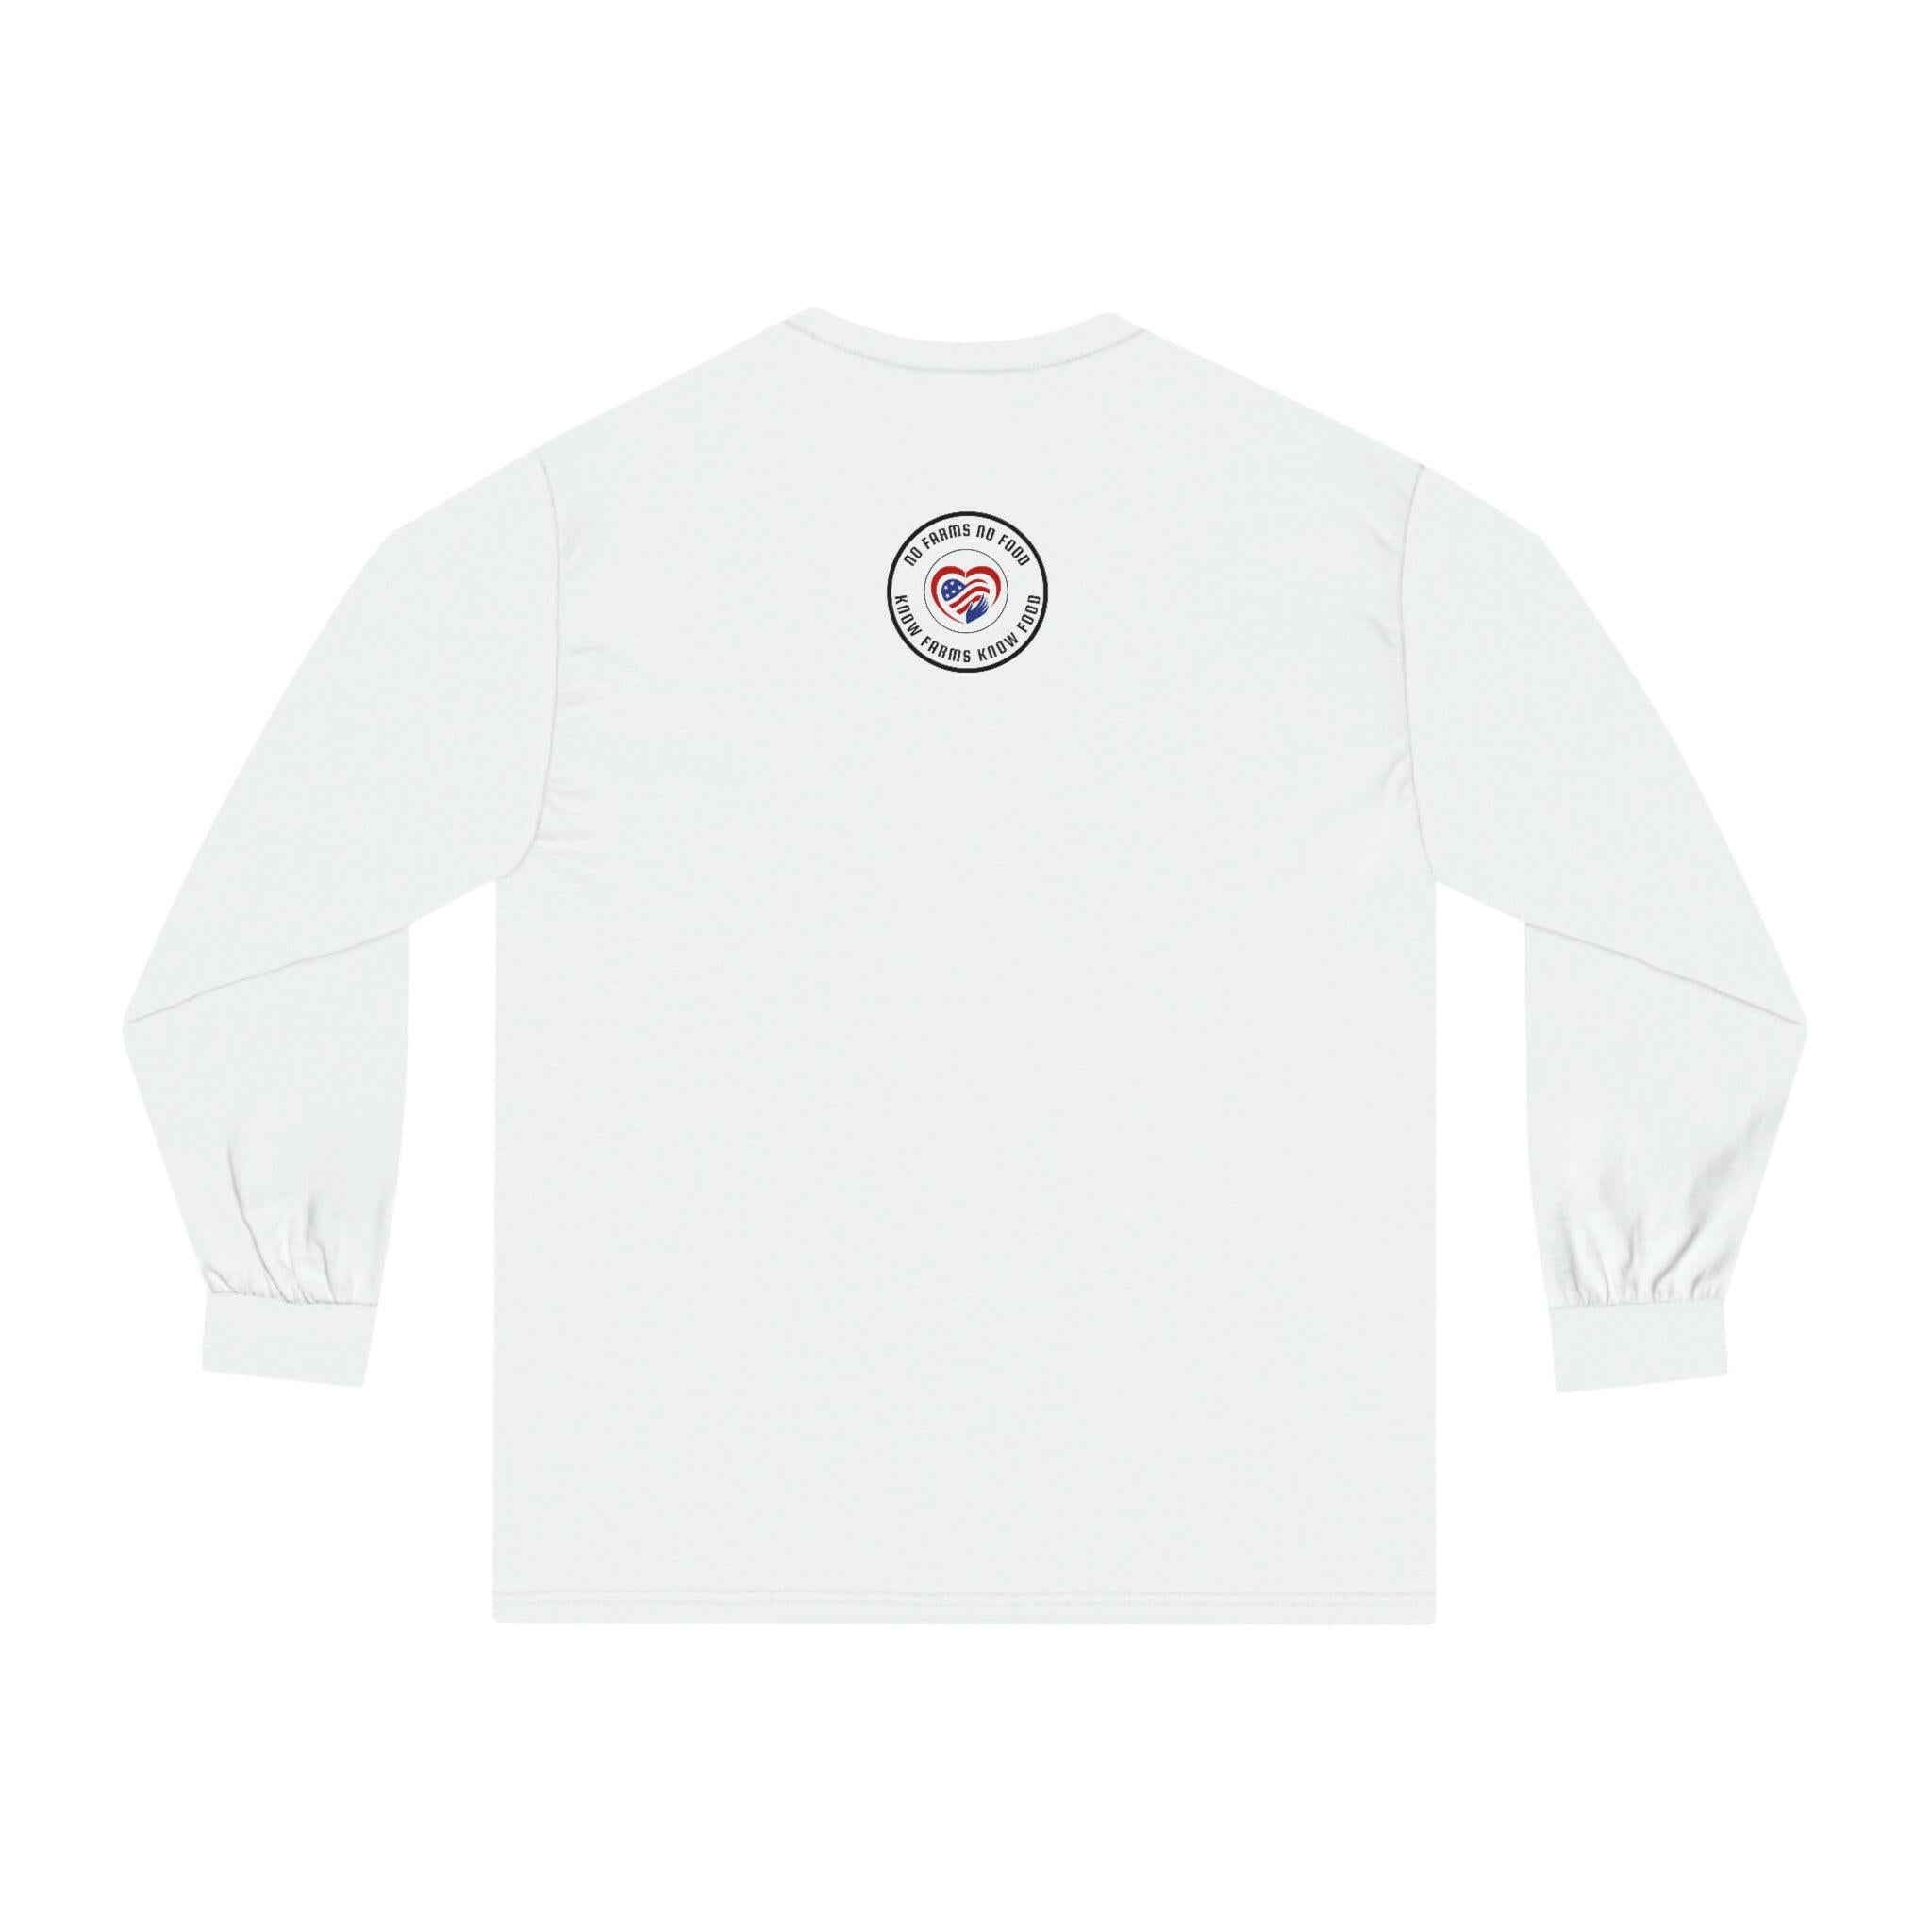 Hand Over Heart - Unisex Classic Long Sleeve T-Shirt.